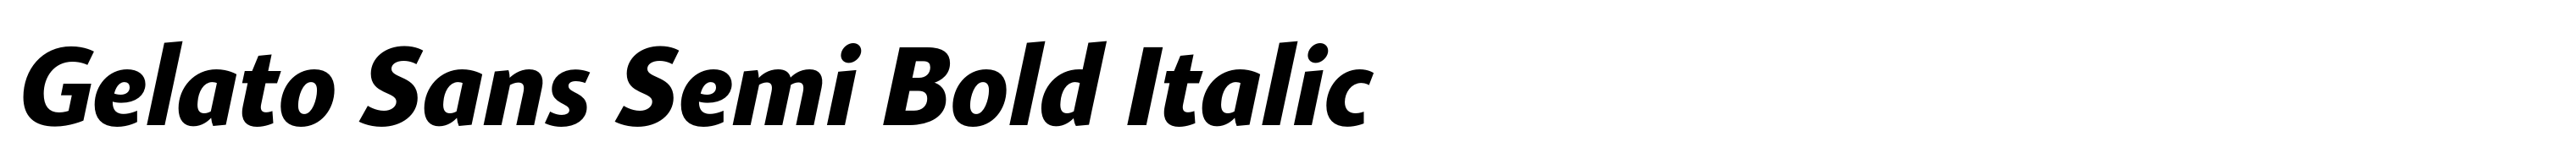 Gelato Sans Semi Bold Italic